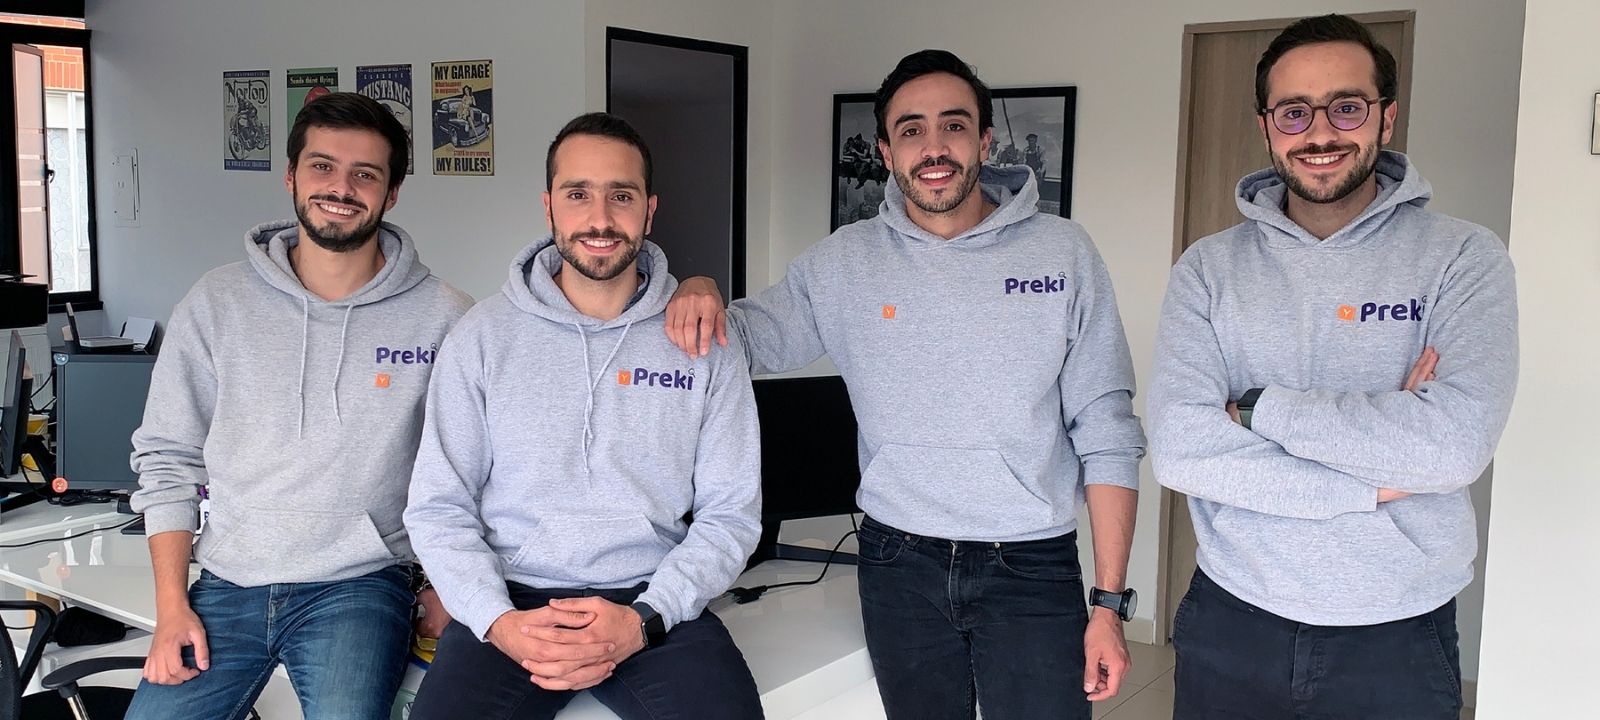 Integrantes de Preki, la start-up seleccionada por Ycombinator